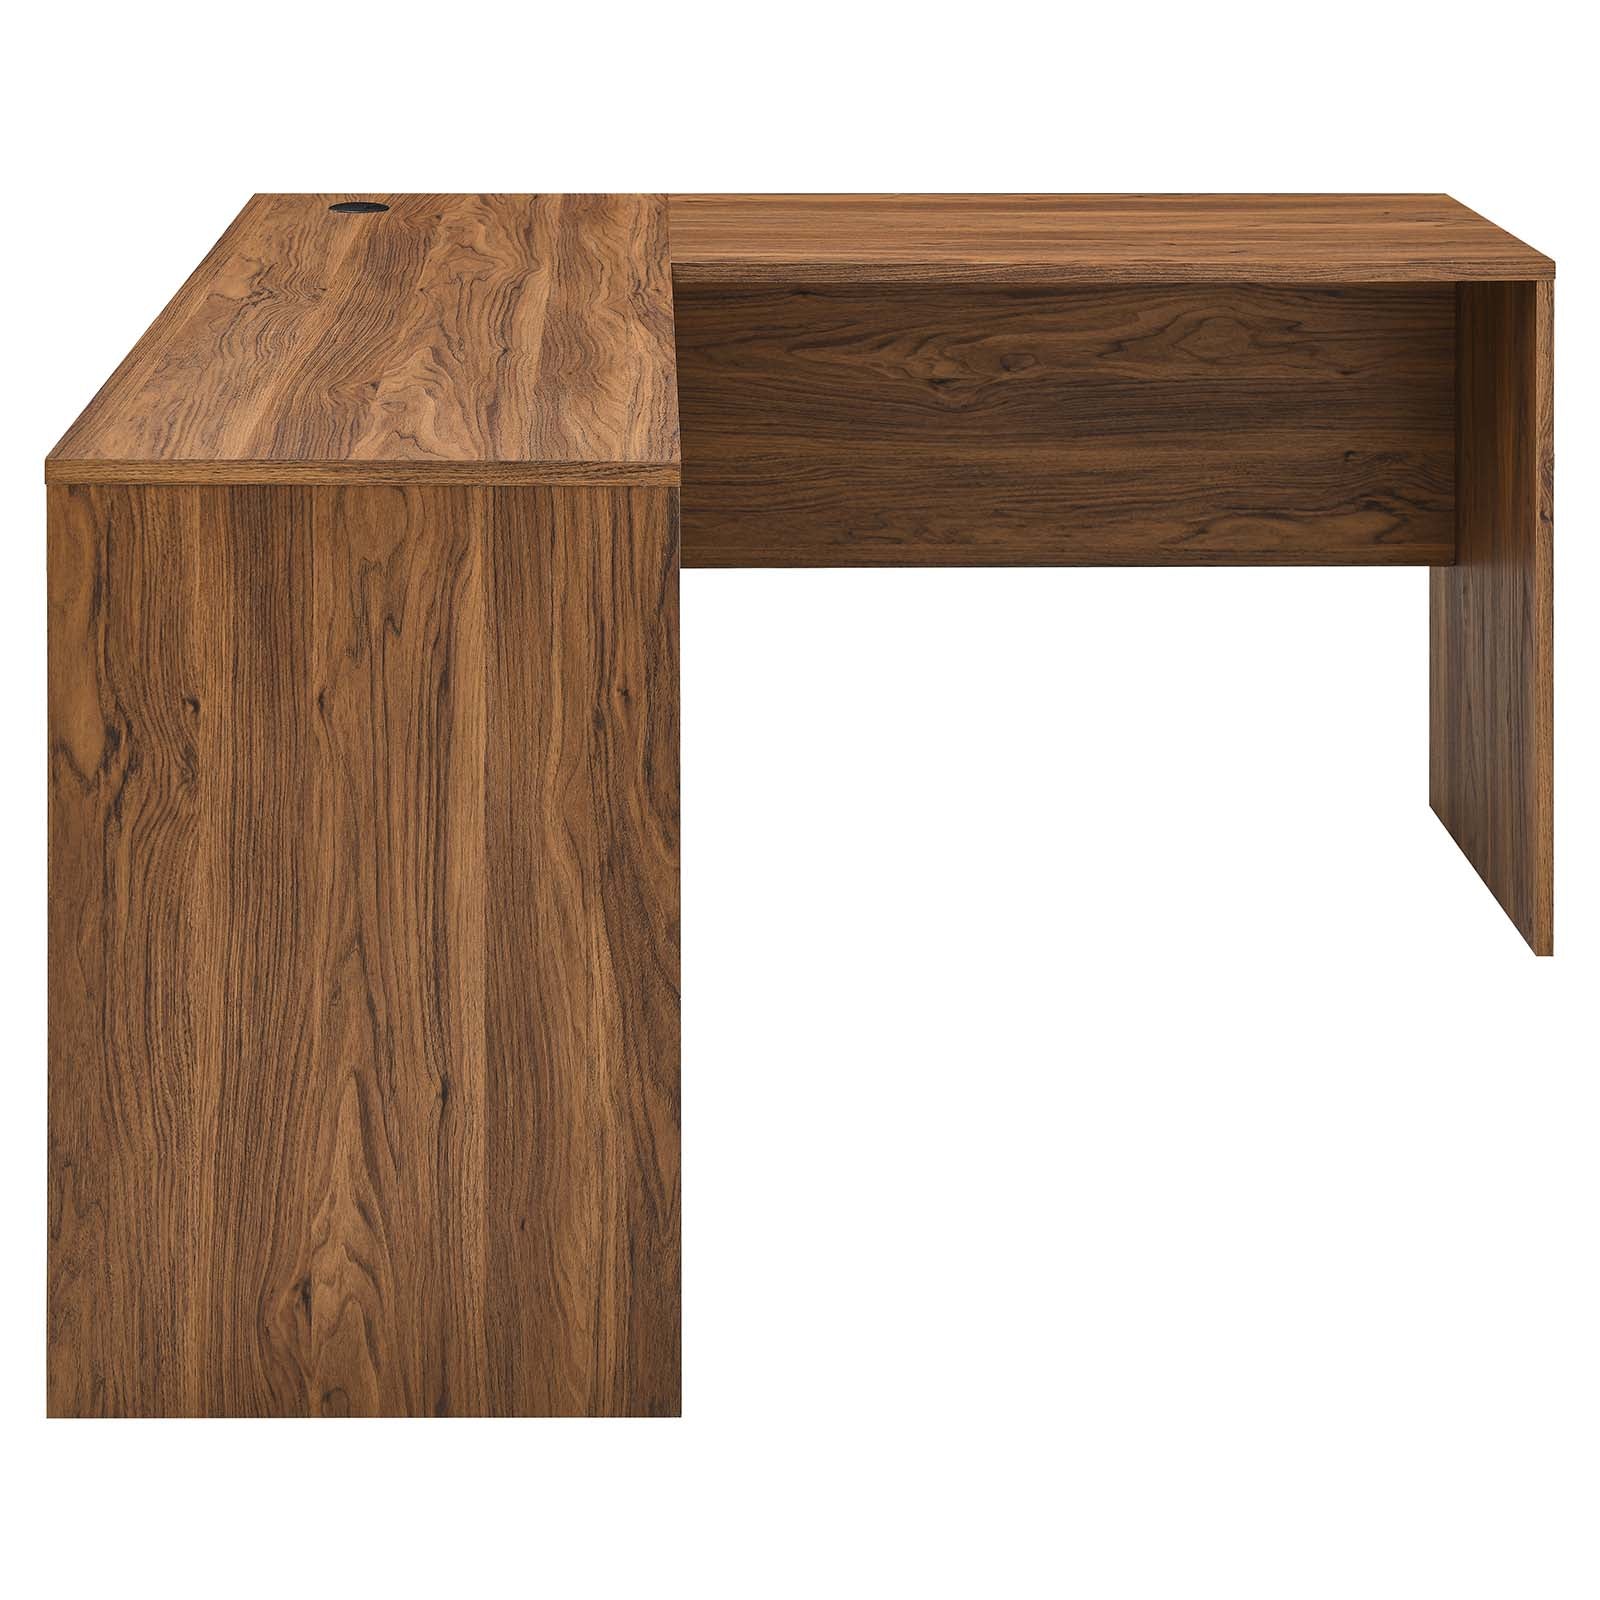 Venture L-Shaped Wood Office Desk - East Shore Modern Home Furnishings